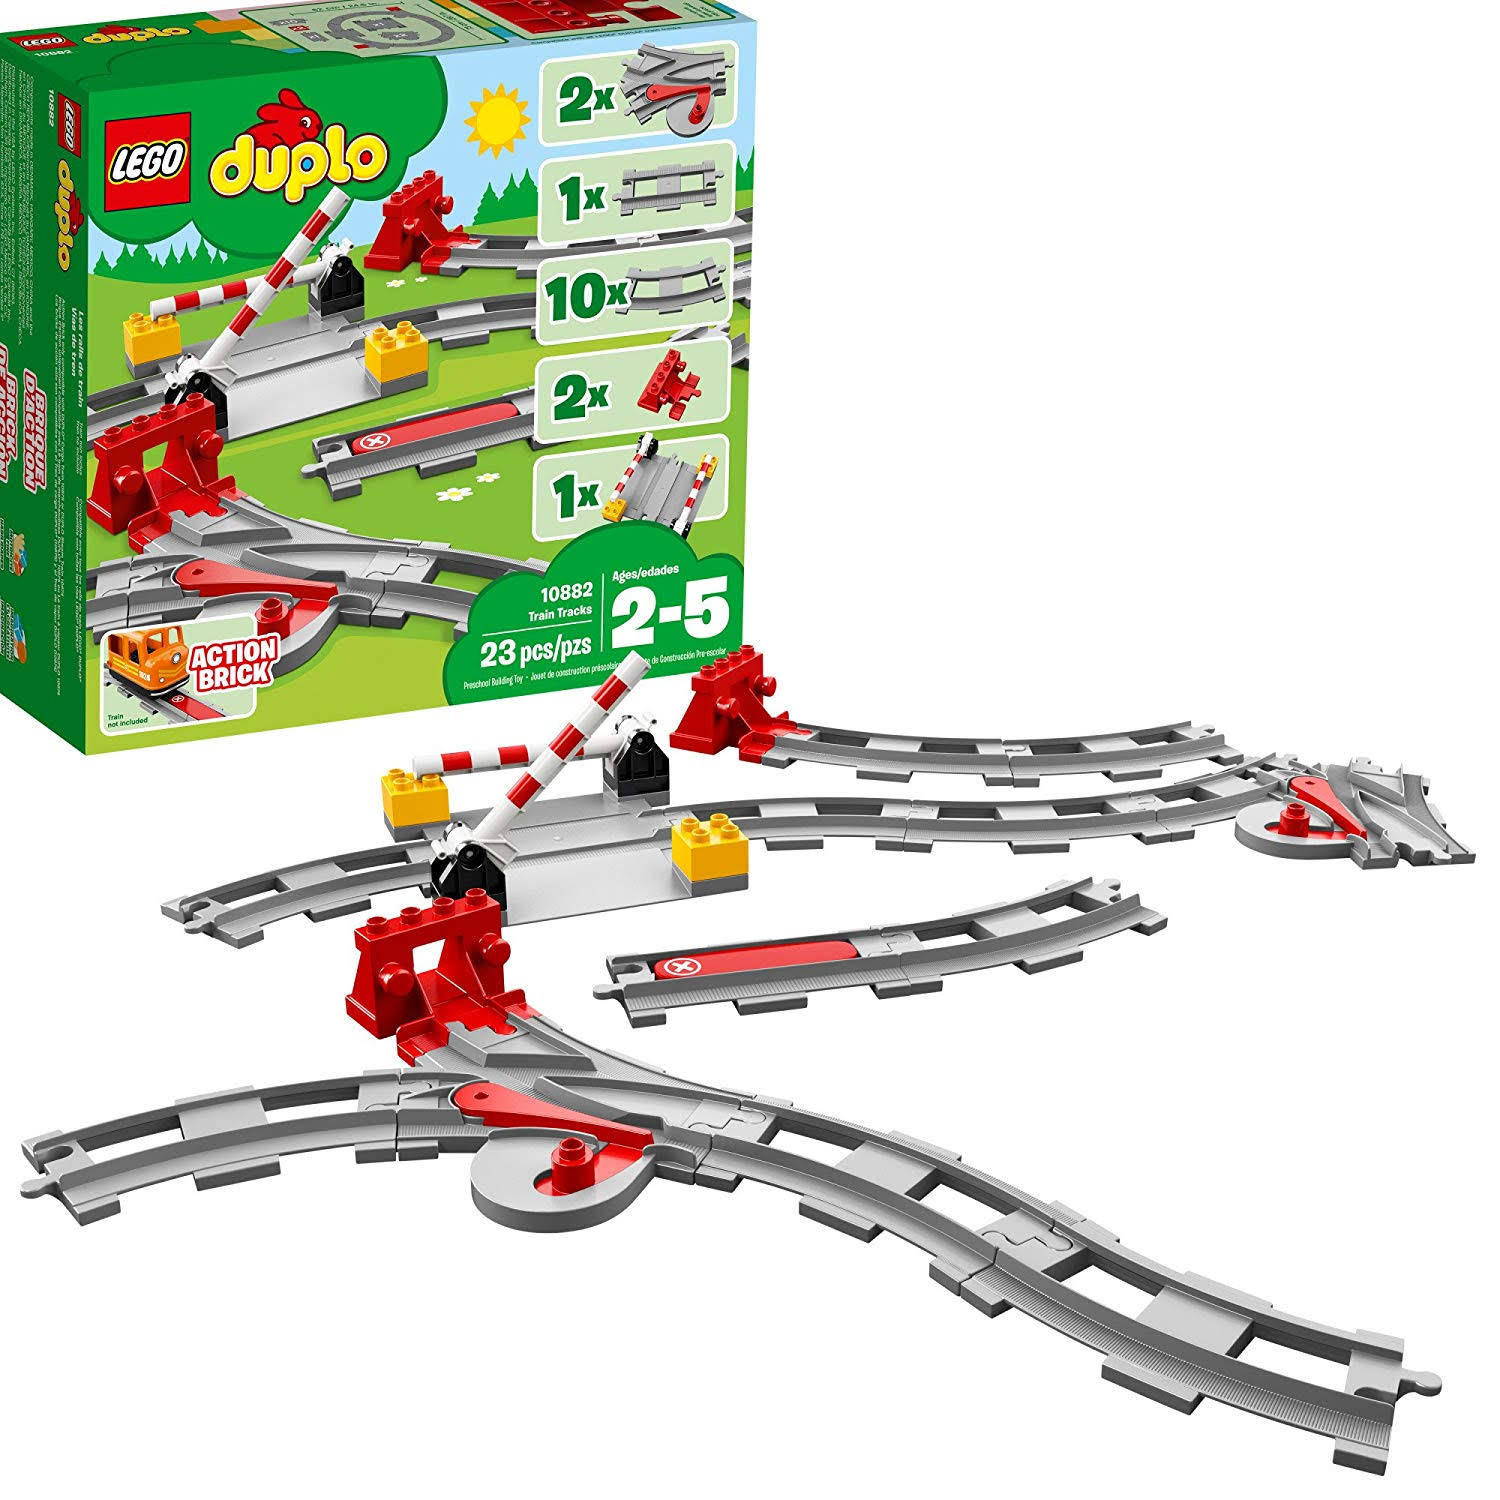 LEGO DUPLO Train Tracks 10882 Building Blocks (23 Piece)